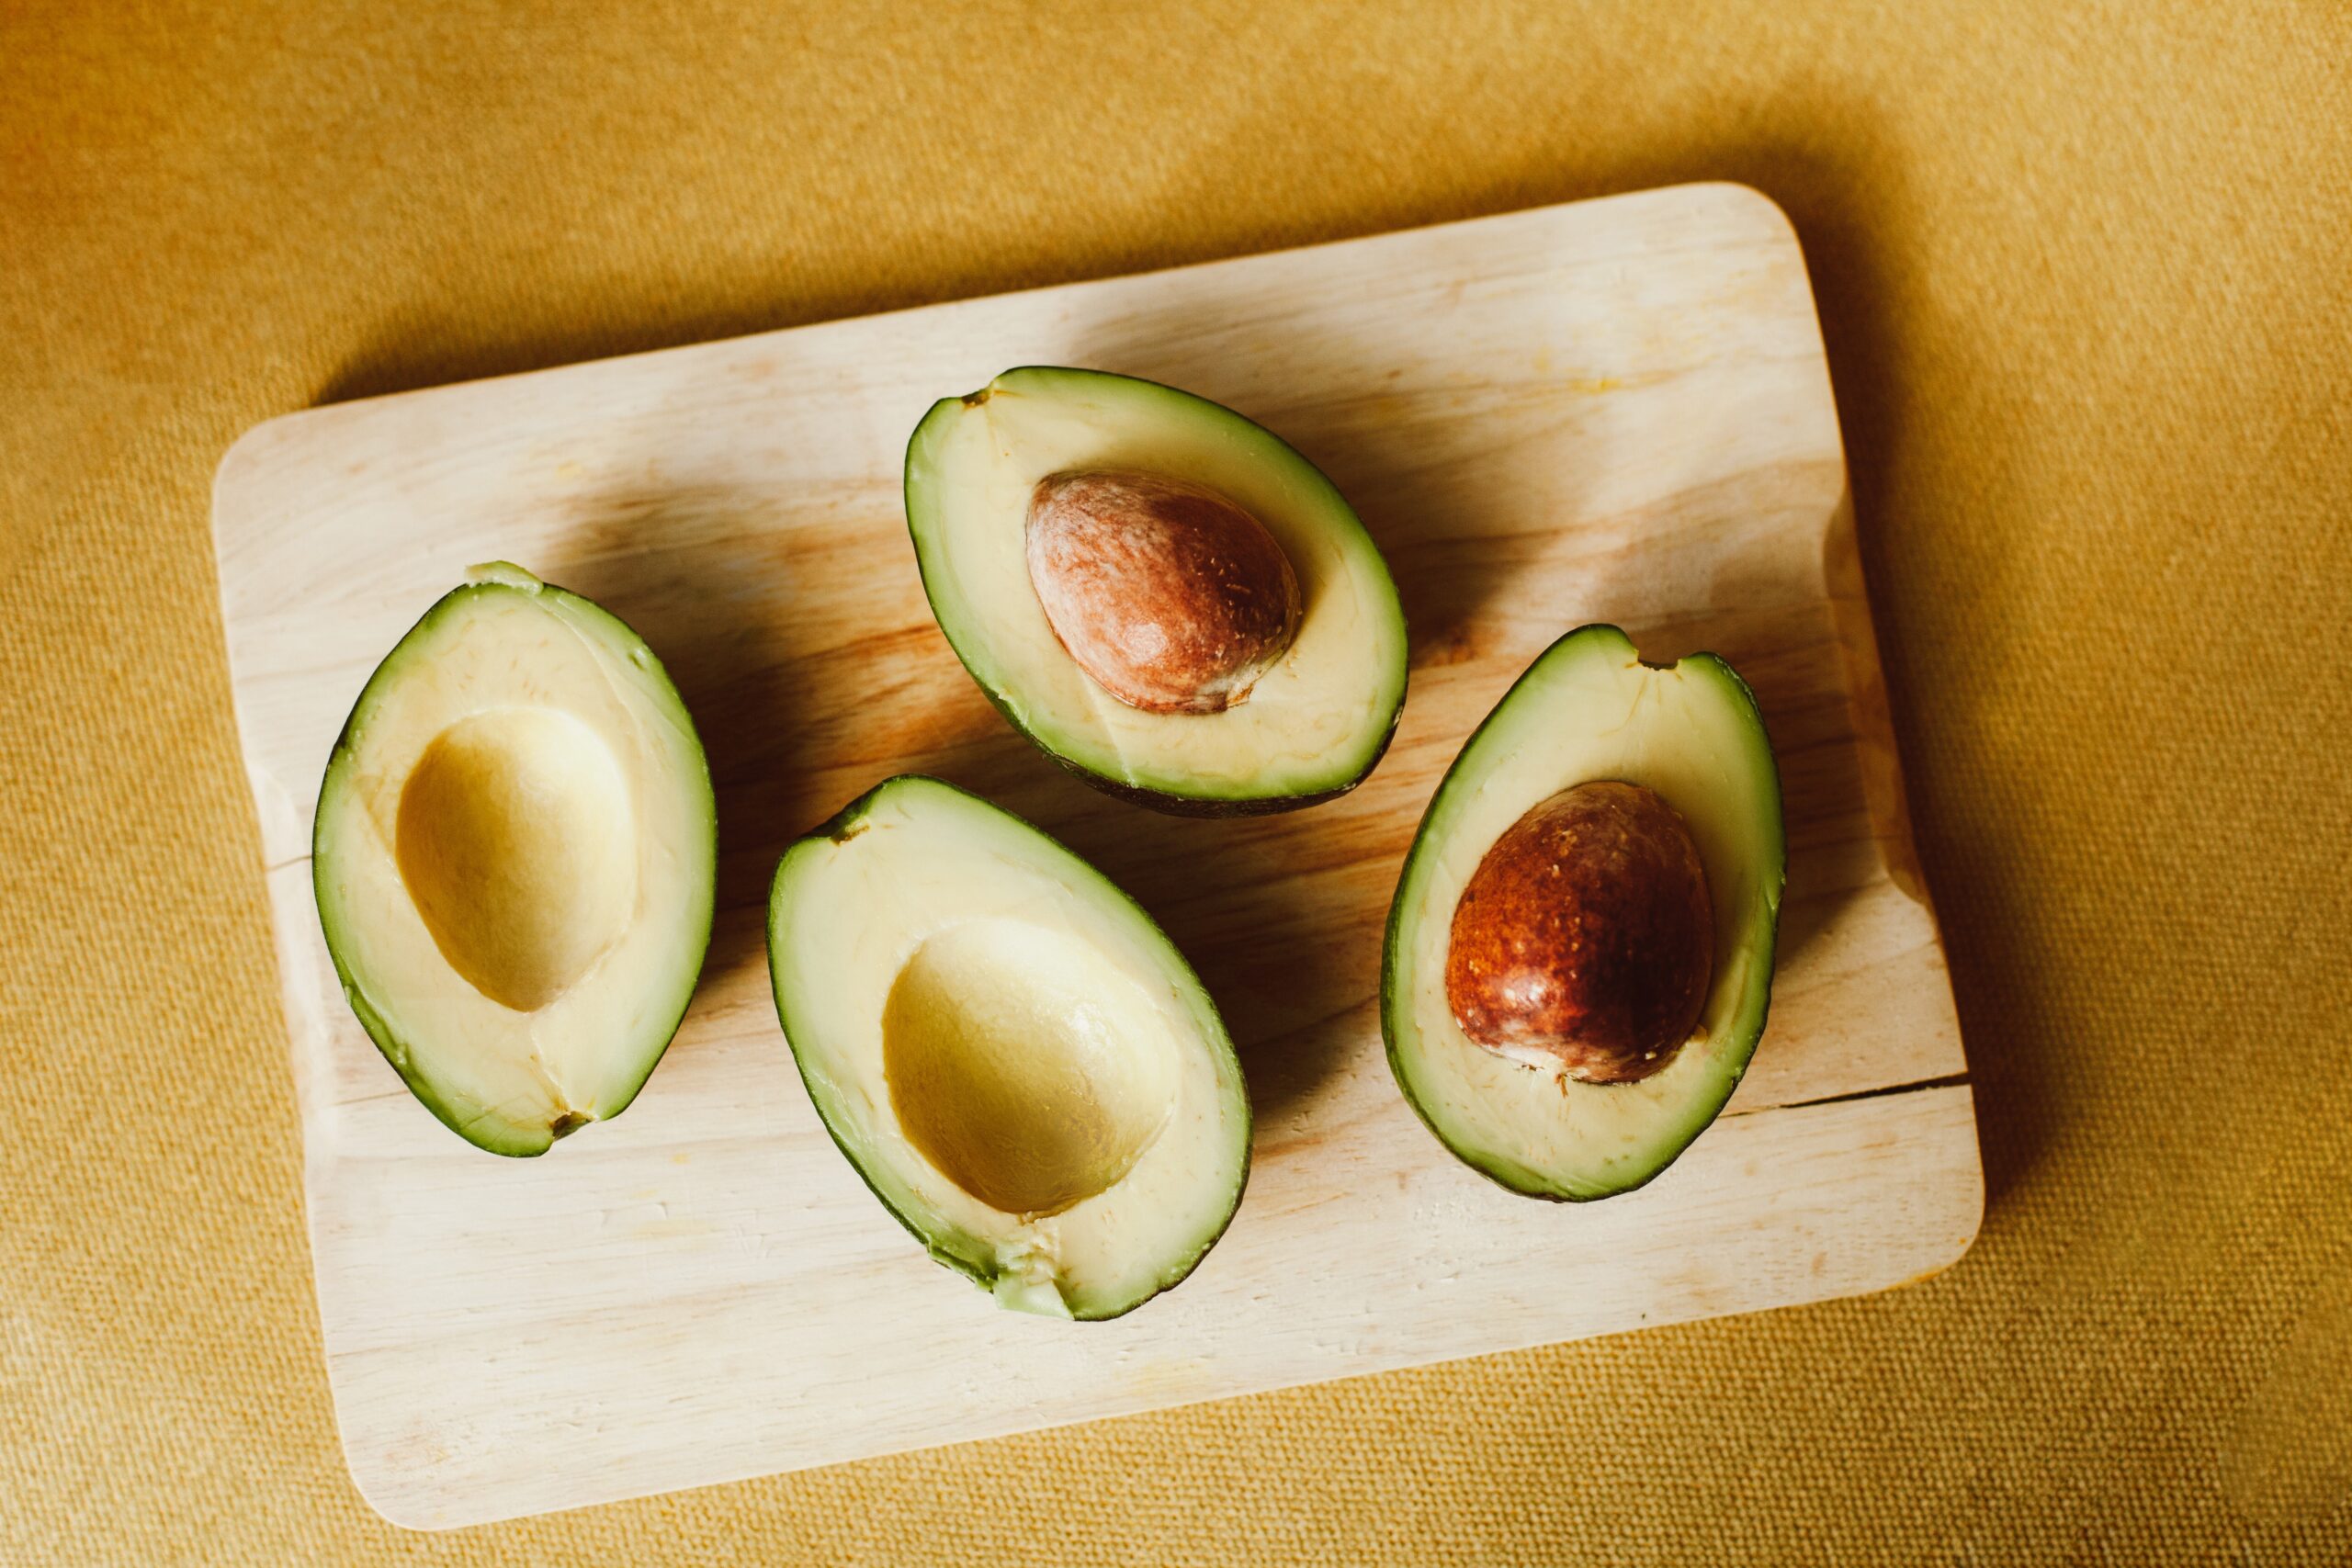 Health benefits of avocados